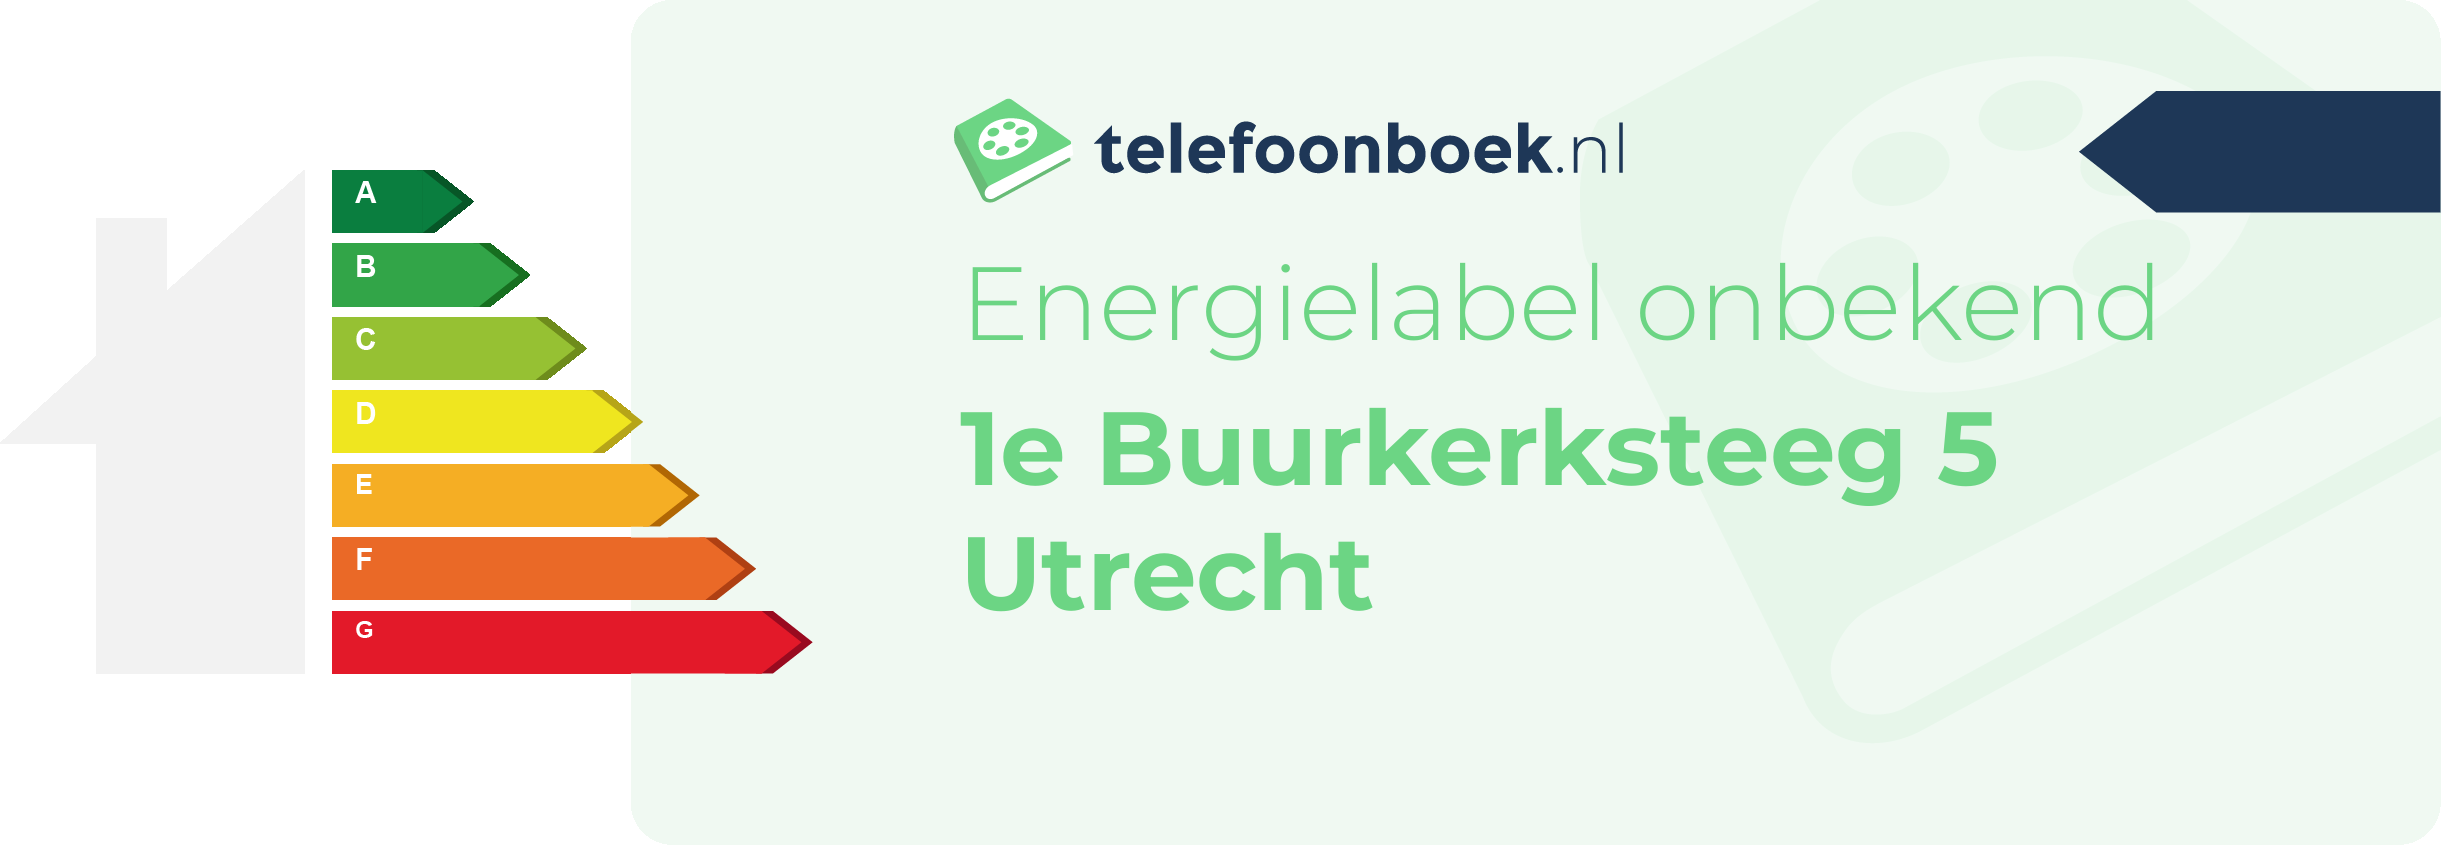 Energielabel 1e Buurkerksteeg 5 Utrecht